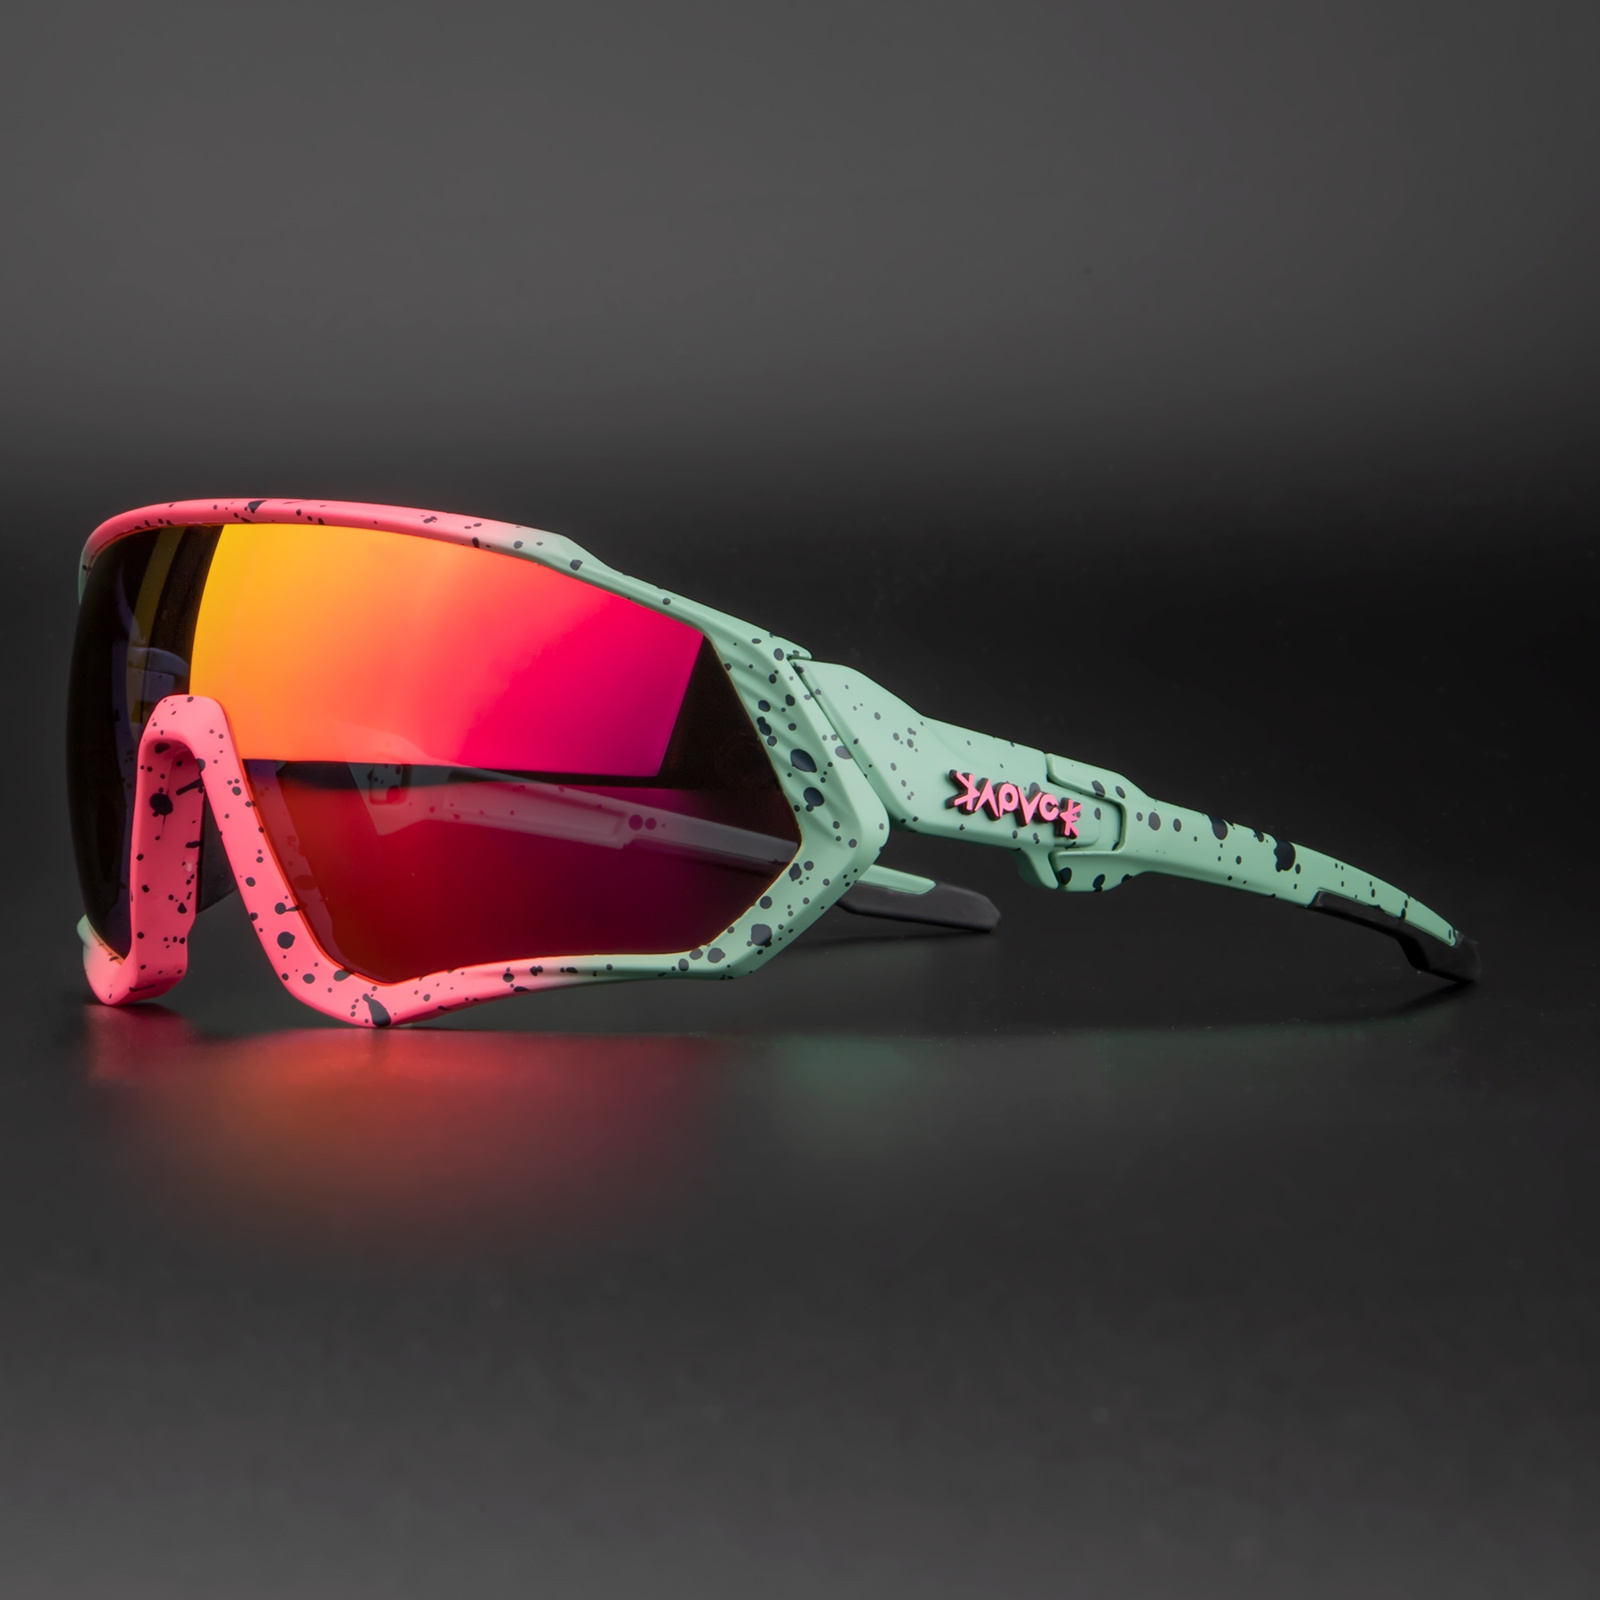 Polarized Sports Sunglasses for Men - Riding, Running, Golf, Fishing,  Tennis - Black Gray - UV Protection